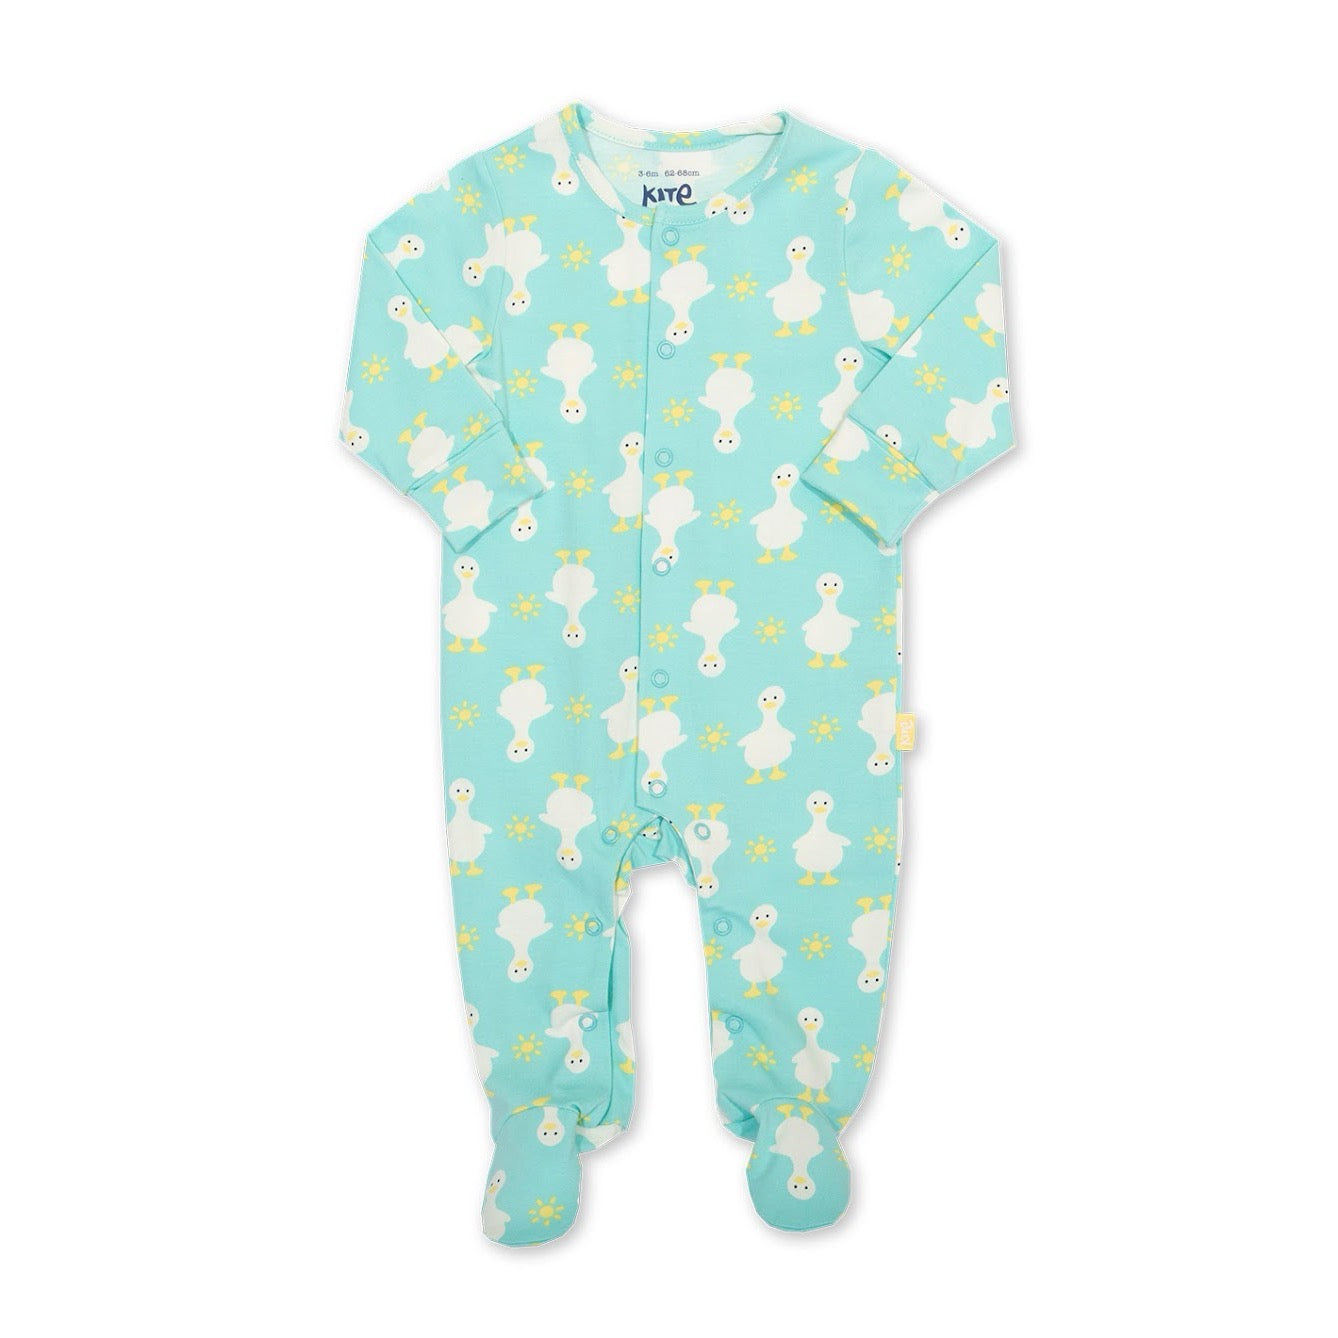 Kite Sunny Duck Baby Sleepsuit 41-8740 Clothing NEWBORN / Aqua,0-1M / Aqua,0-3M / Aqua,3-6M / Aqua,6-9M / Aqua